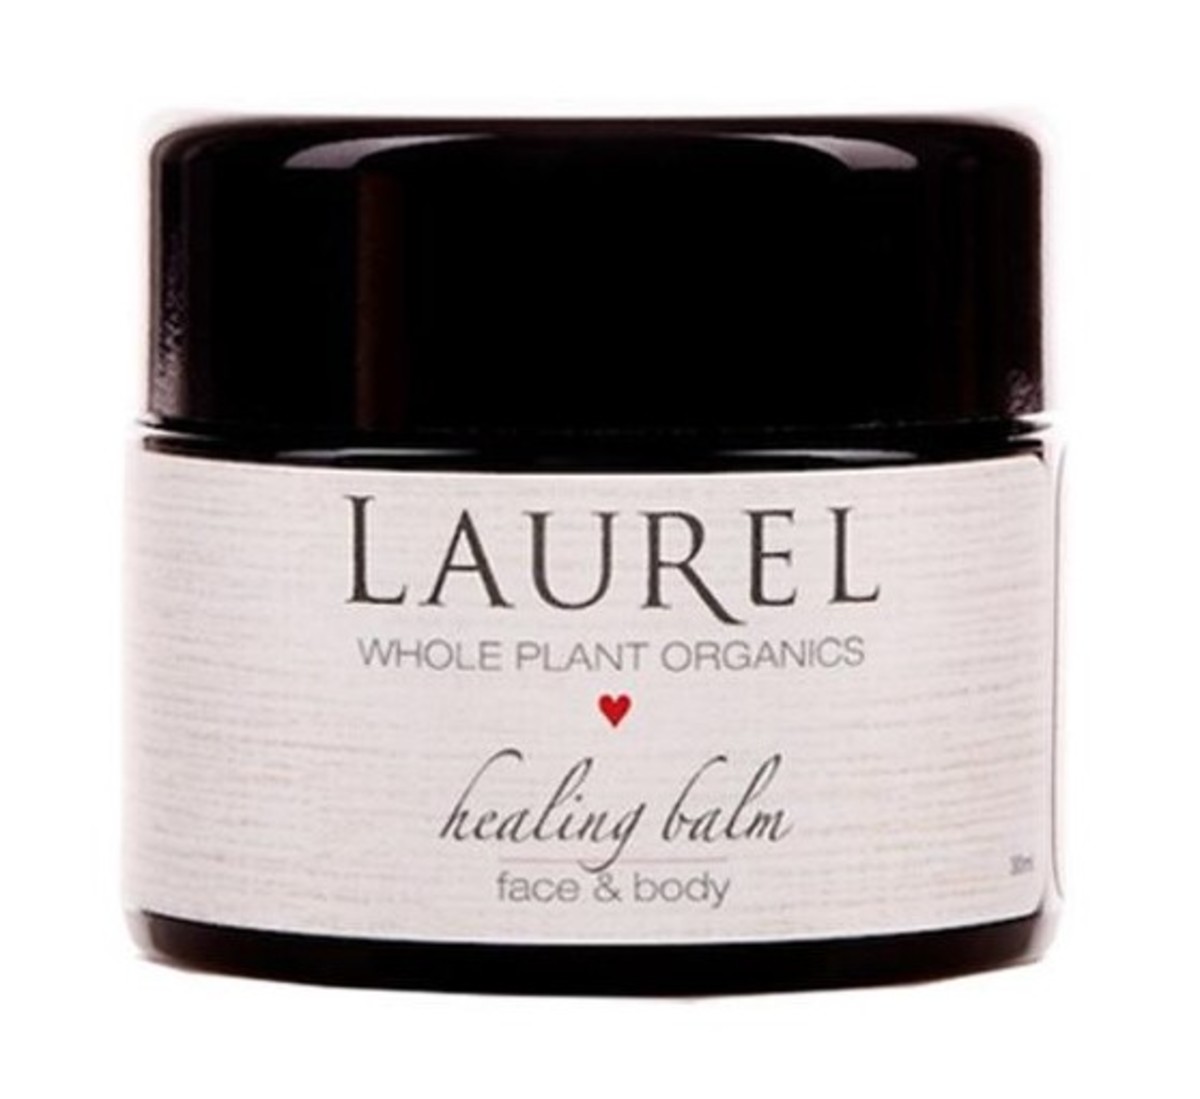 Laurel Whole Plant Organics Healing Balm Face & Body